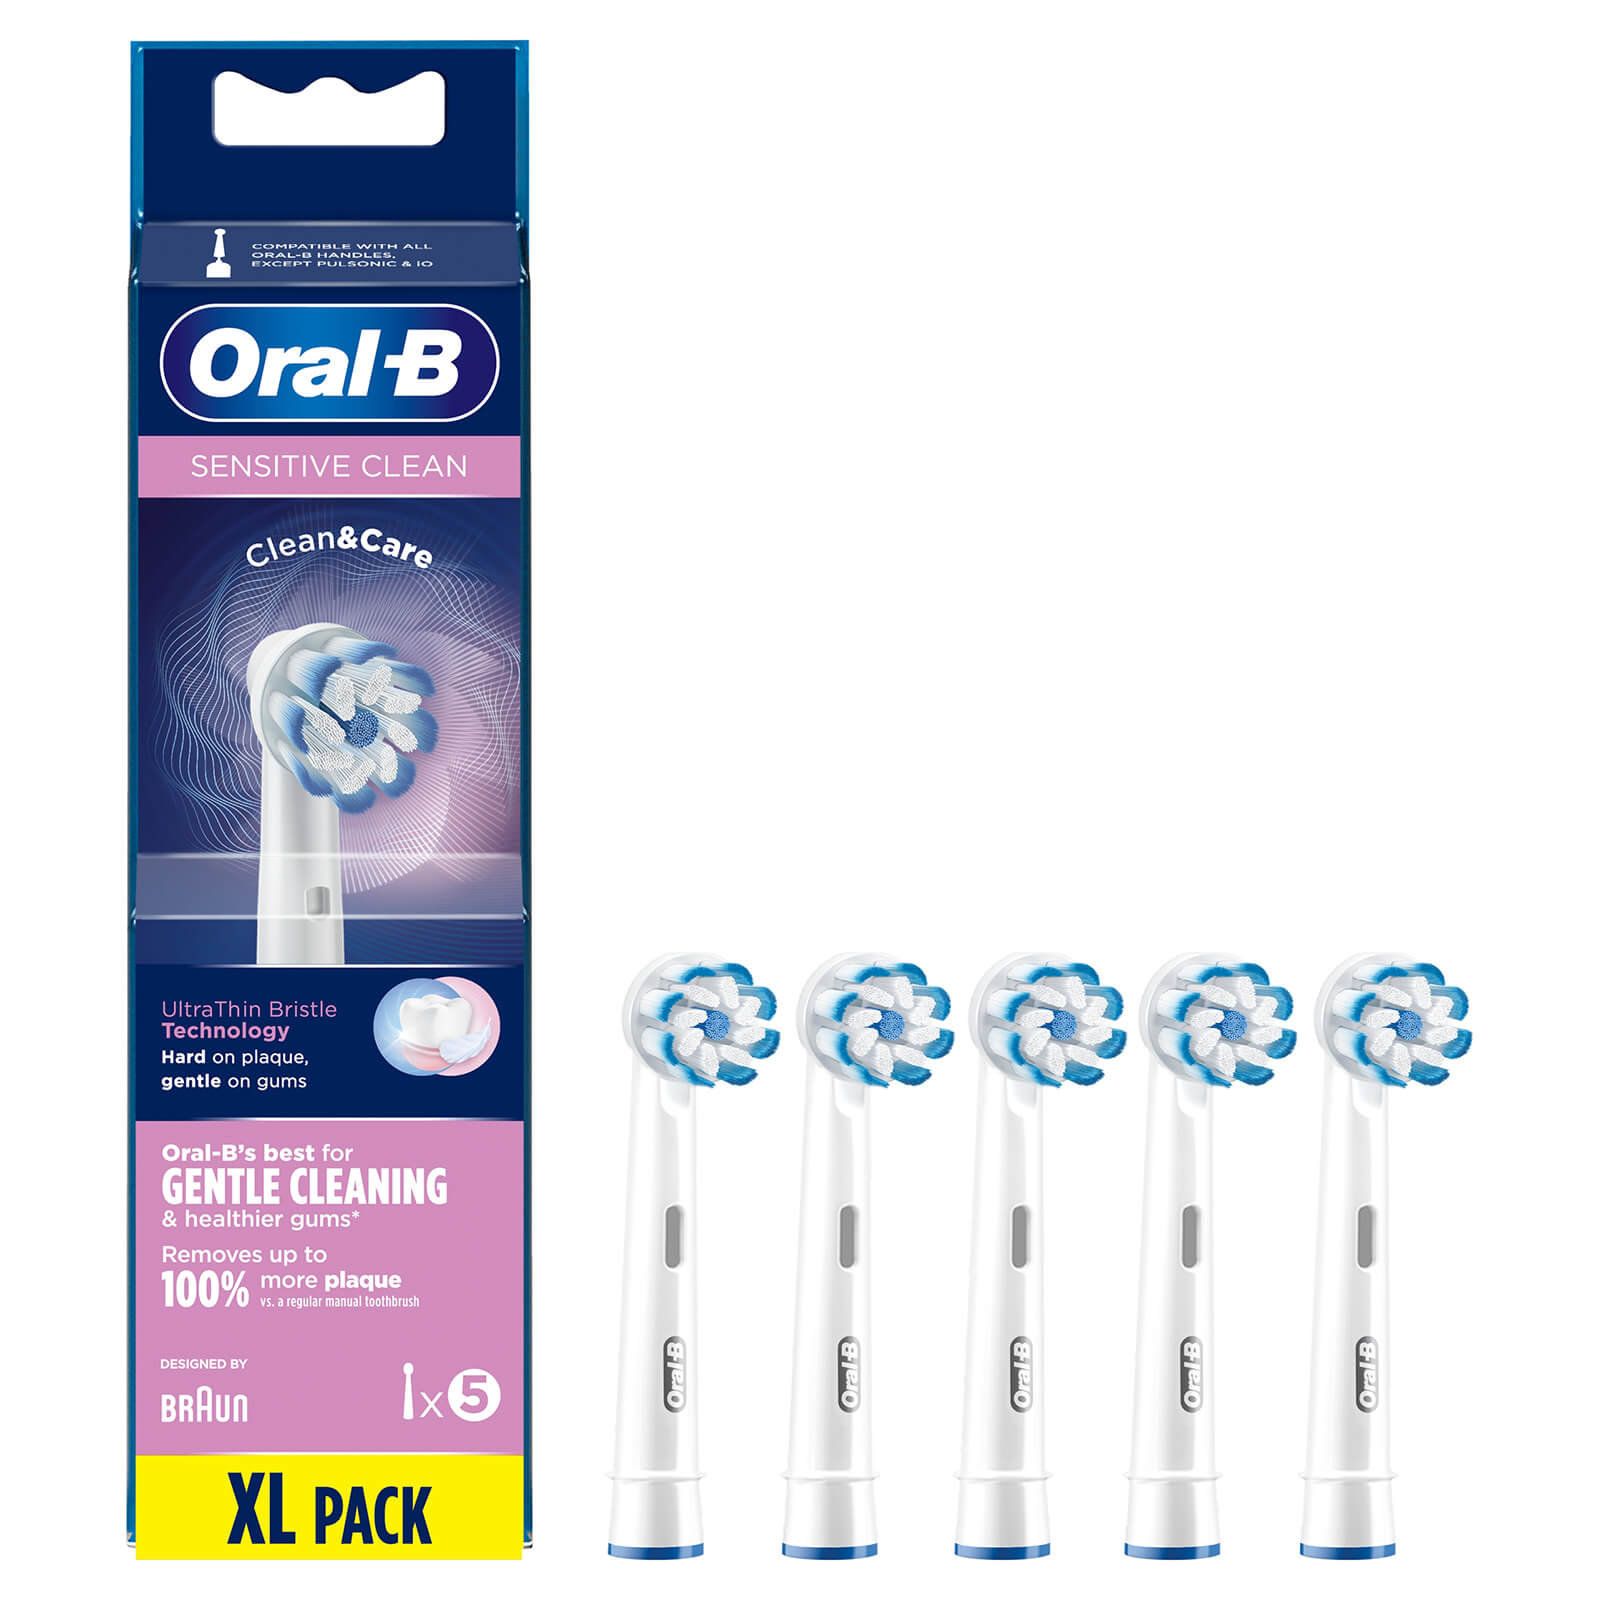 Oral-B Sensitive Clean Toothbrush Head – 5 Counts lookfantastic.com imagine